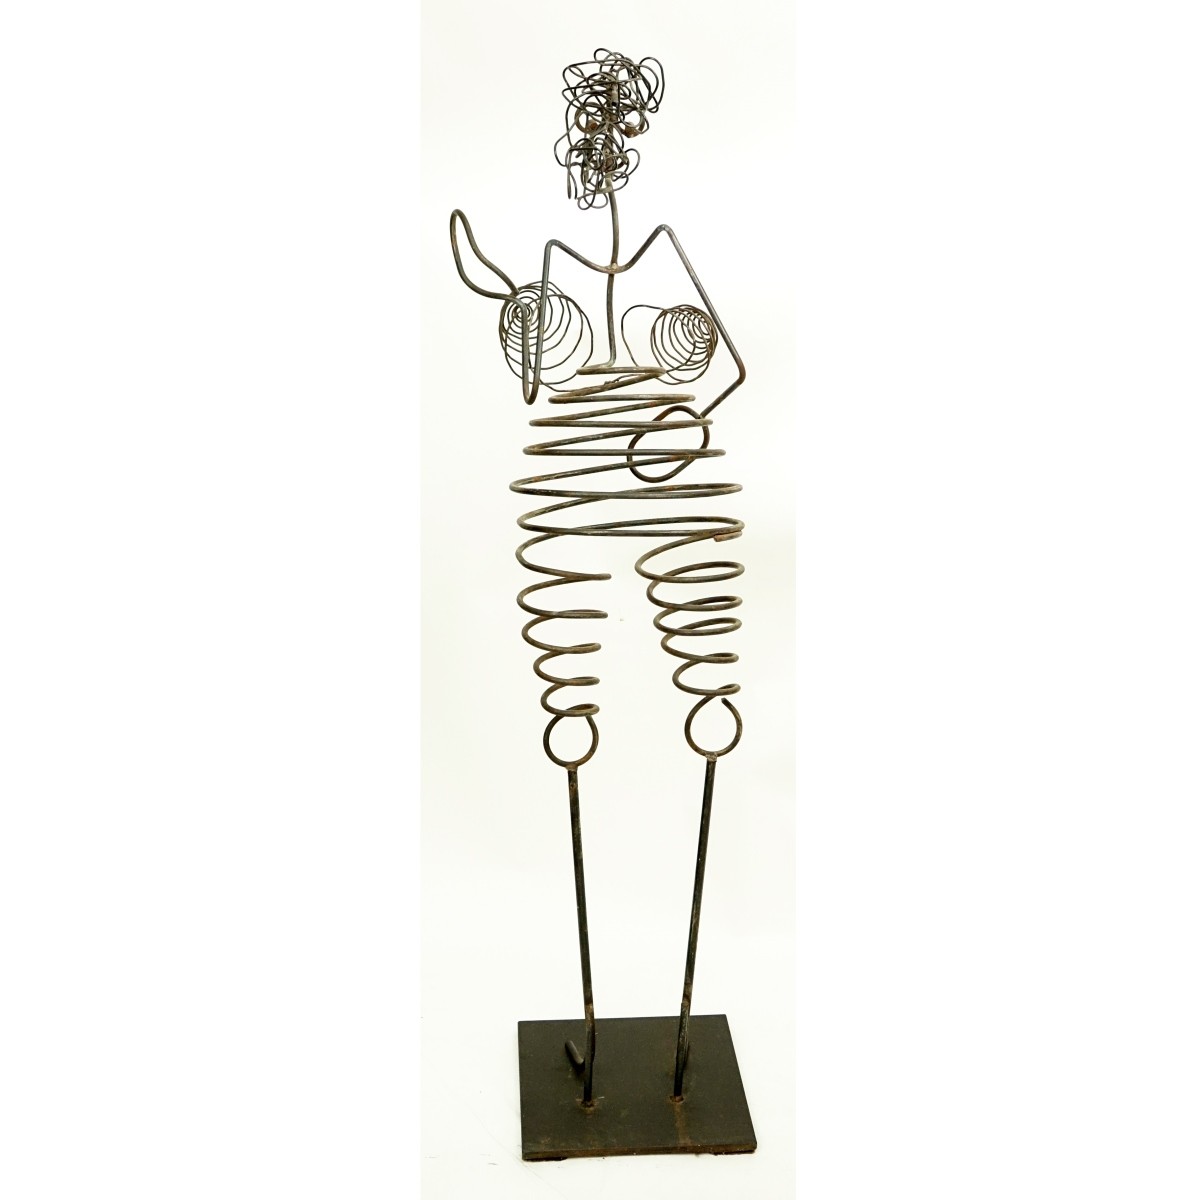 Vincent Magni (born 1963) Kenetic Sculpture